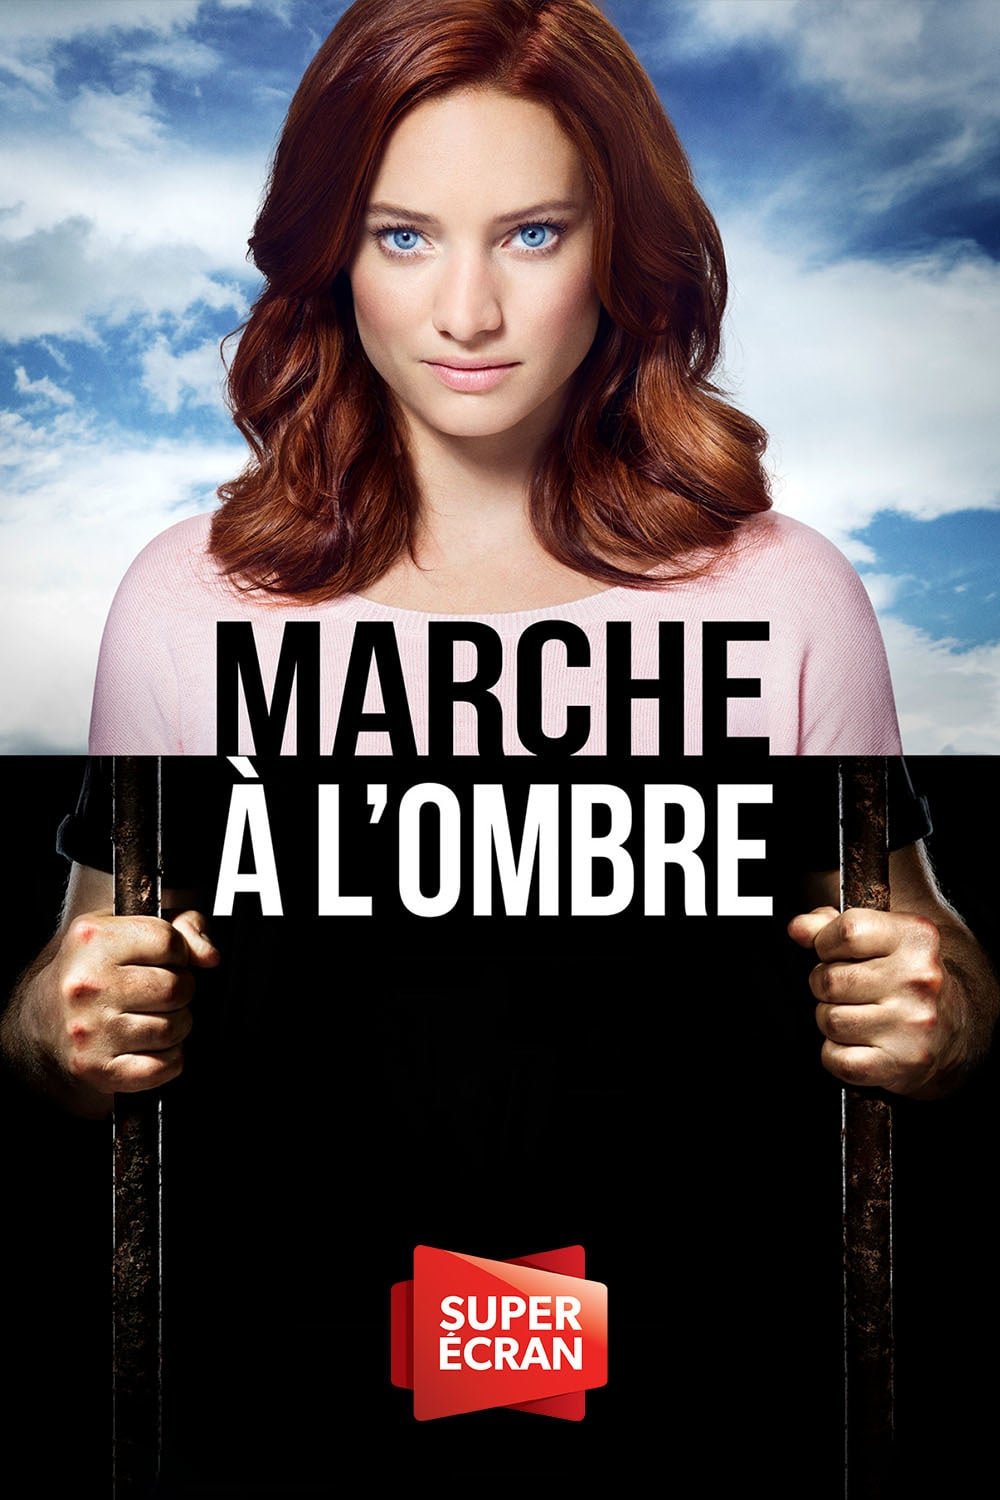 Poster of the movie Marche à l'ombre